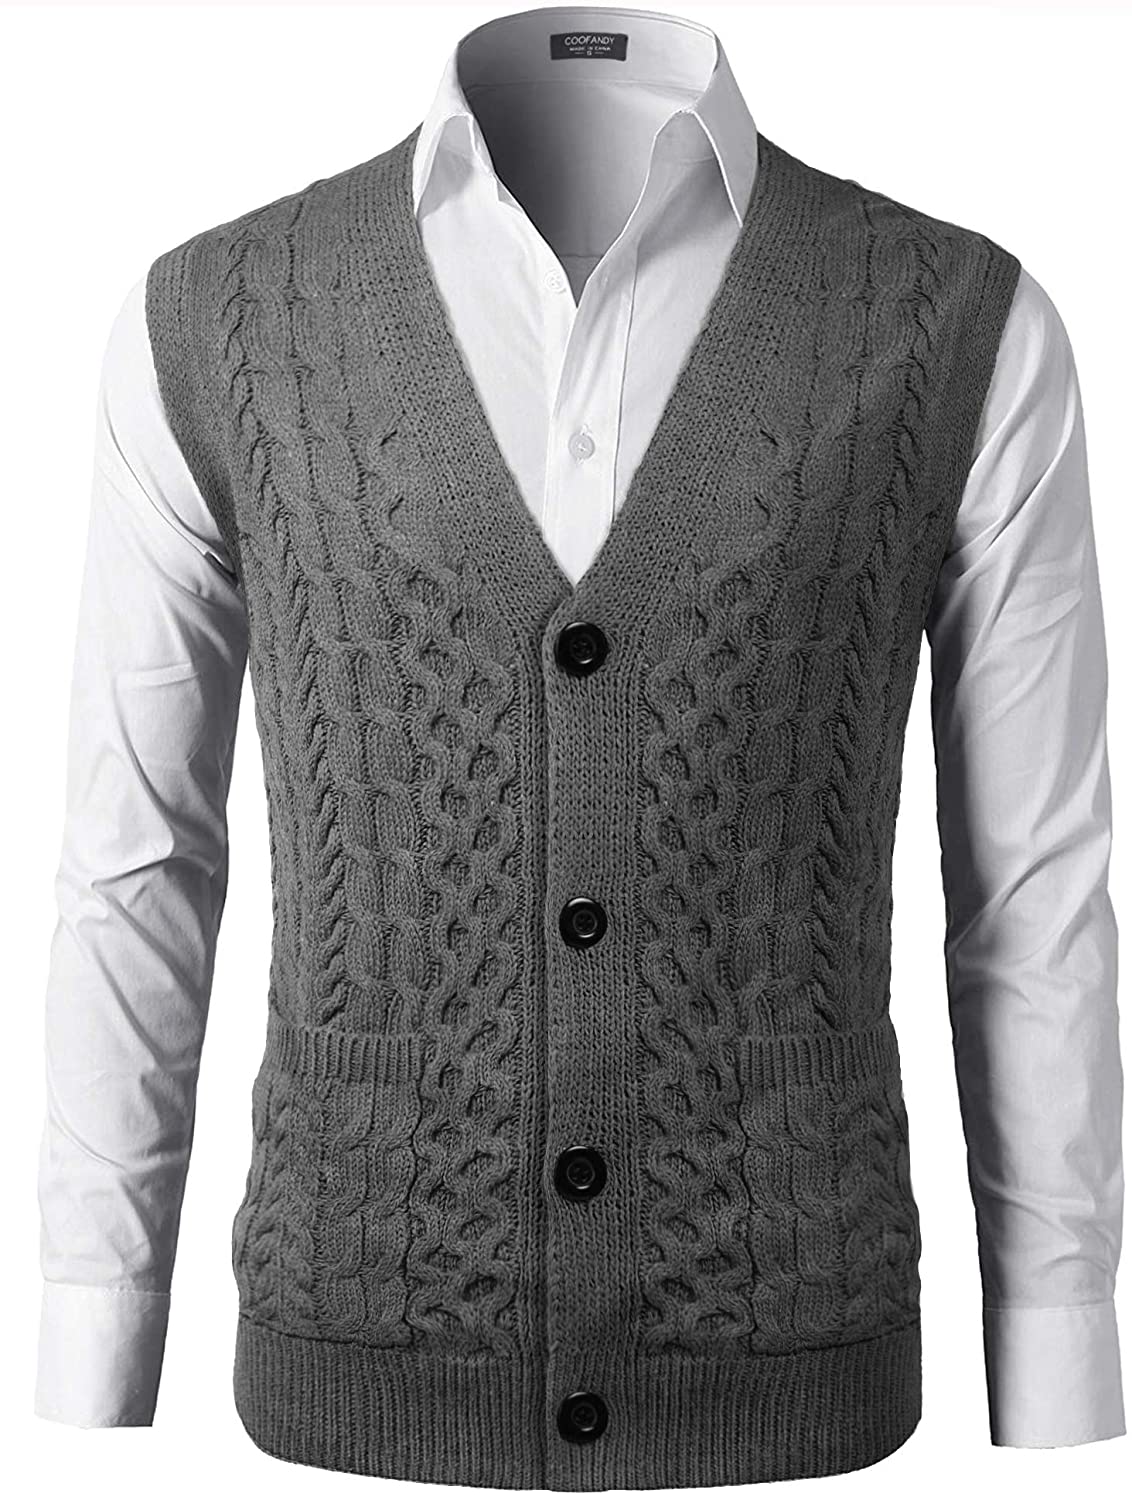 COOFANDY Sweater Vest for Men Sleeveless V Neck Slim Fit Knit Pullover  Sweater V